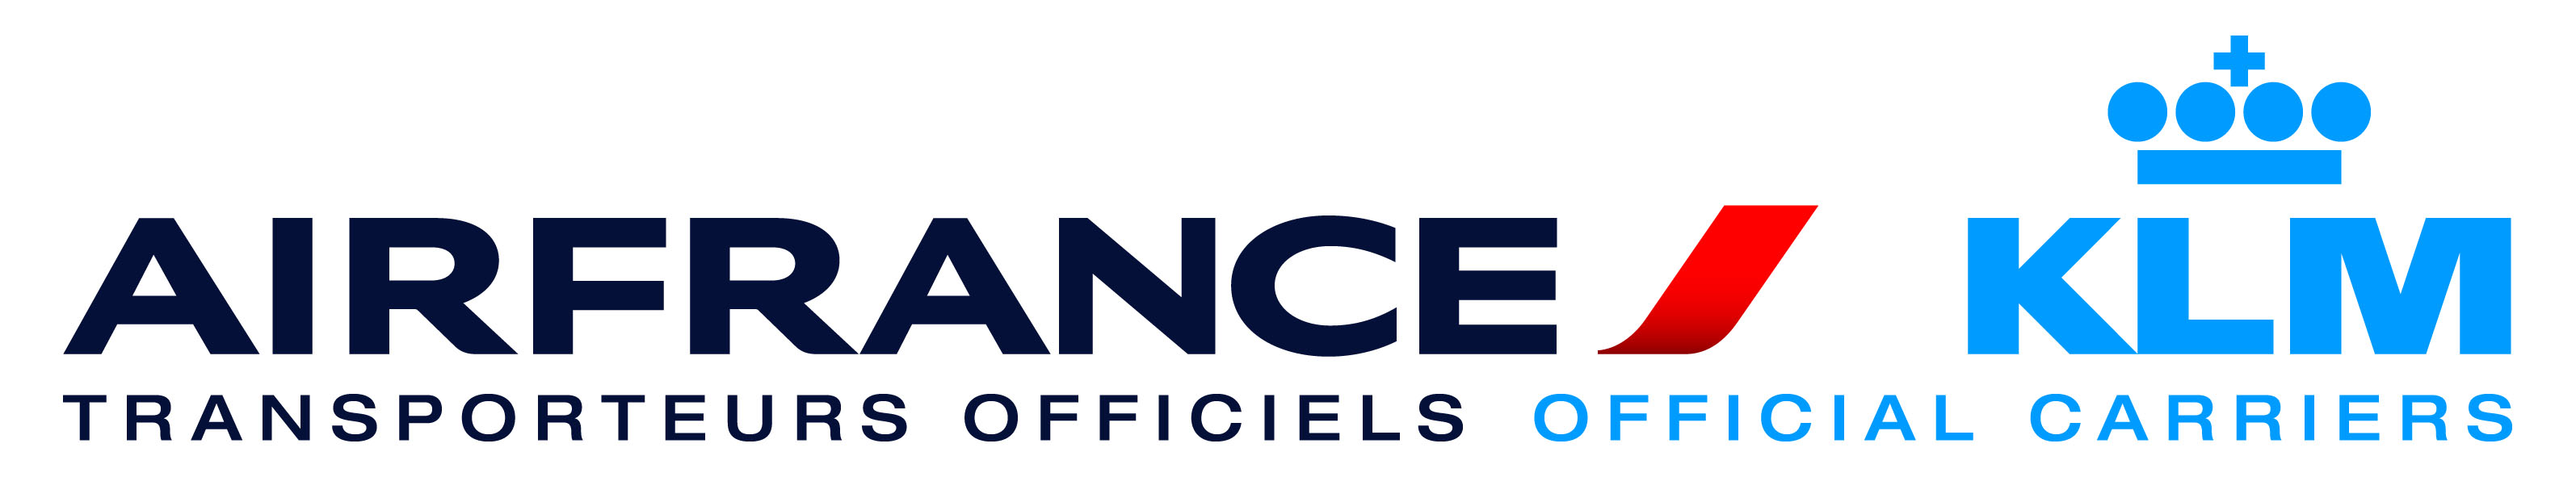 Air France KLM vector logo